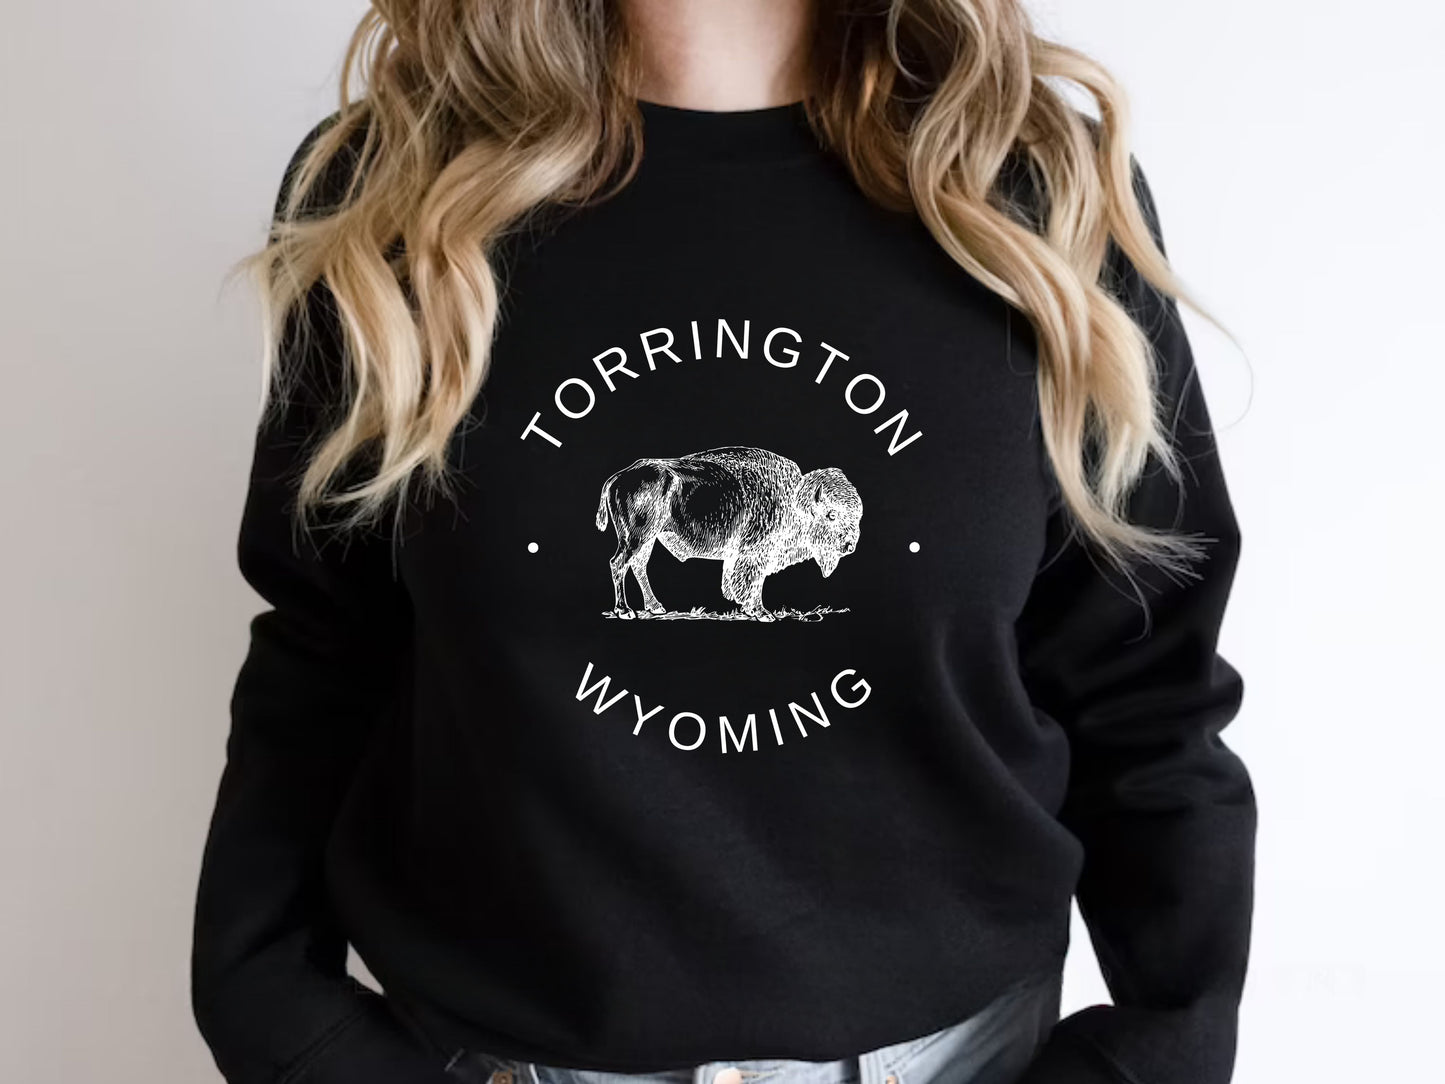 Torrington Women Wyoming Sweatshirt